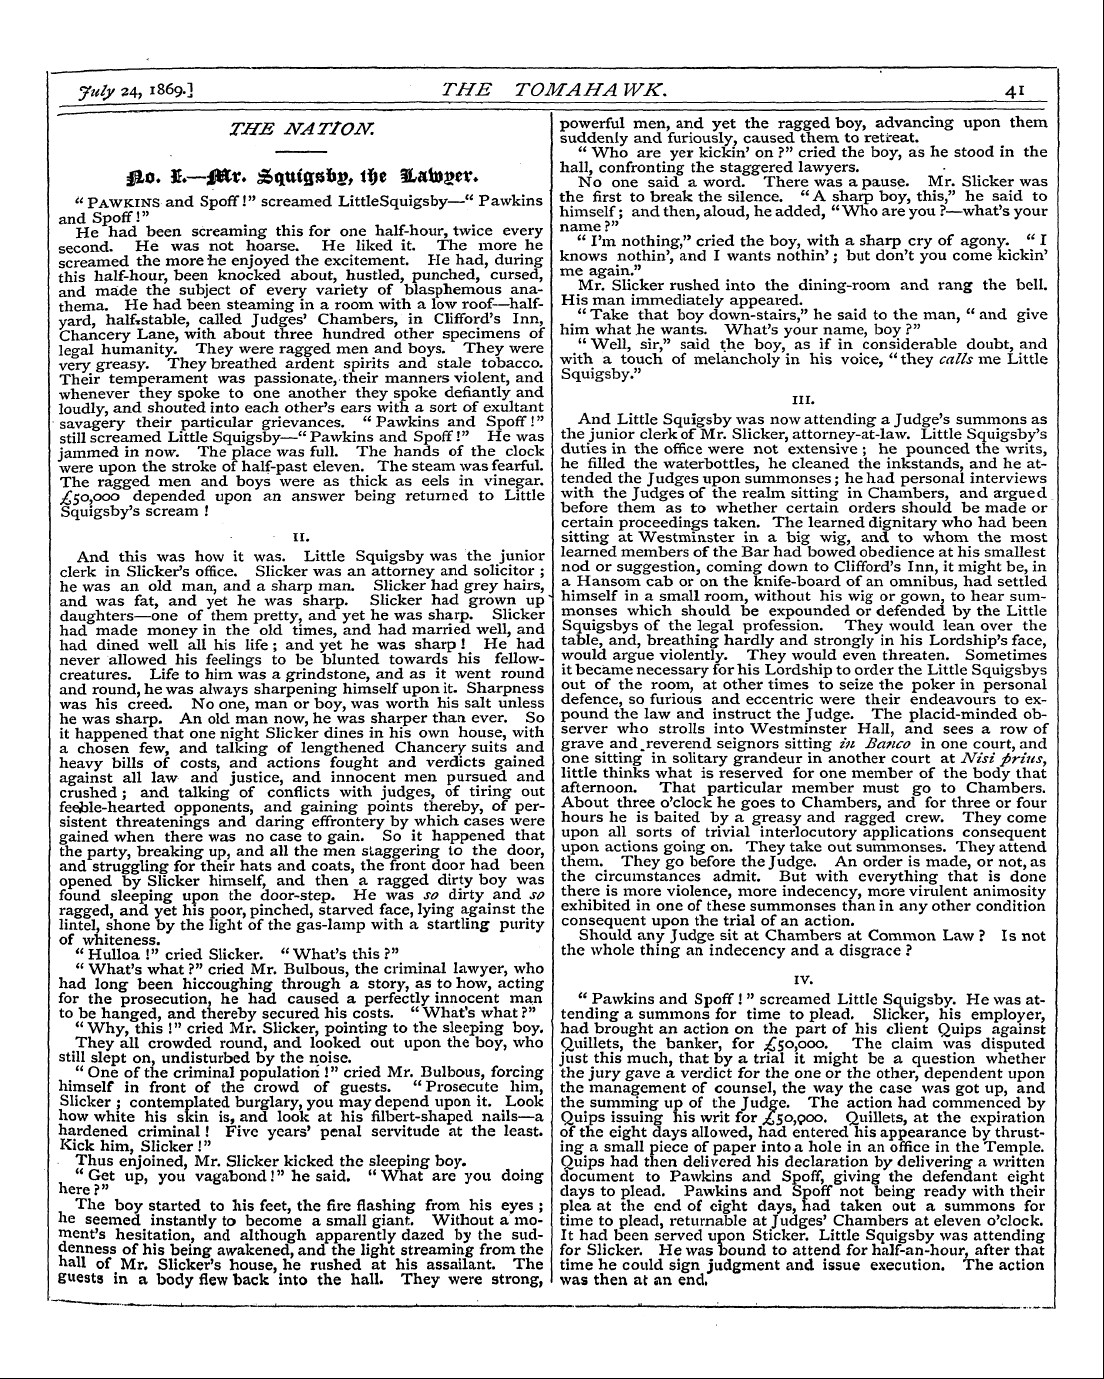 Tomahawk (1867-1870): jS F Y, 1st edition - July 34, 1869. 3 The Tom Ah A Wk, 41